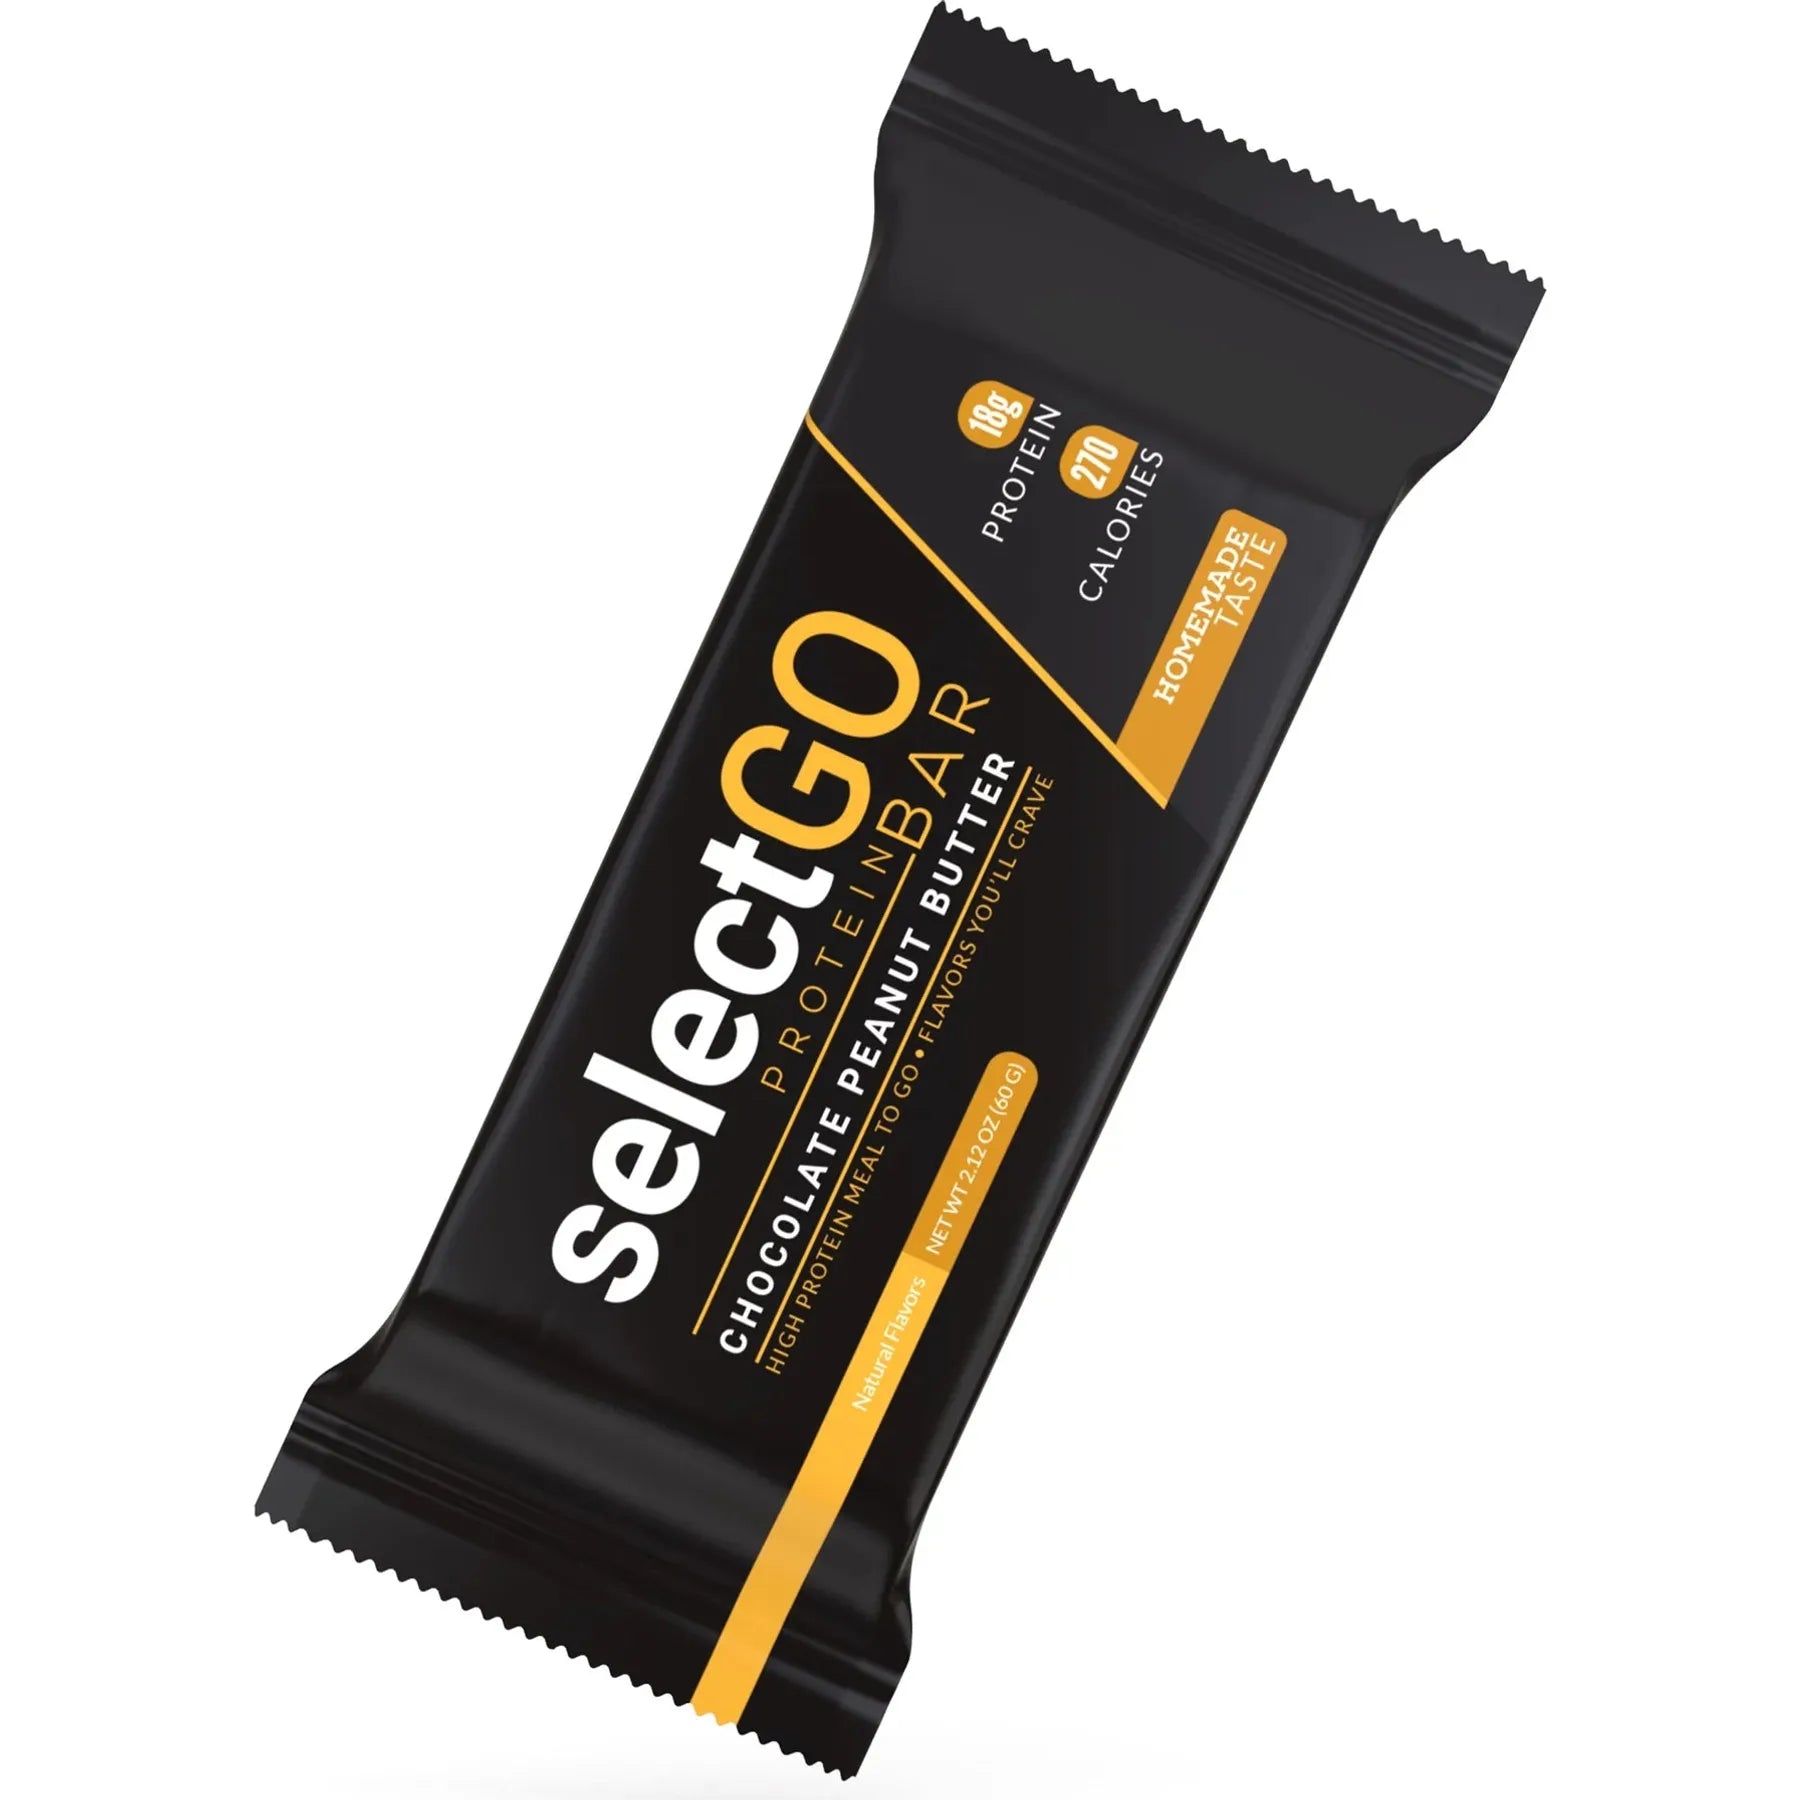 PEScience SelectGO Protein bar (1 bar) pescience-selectgo-protein-bar-1-bar Protein Snacks Chocolate Peanut Butter PEScience